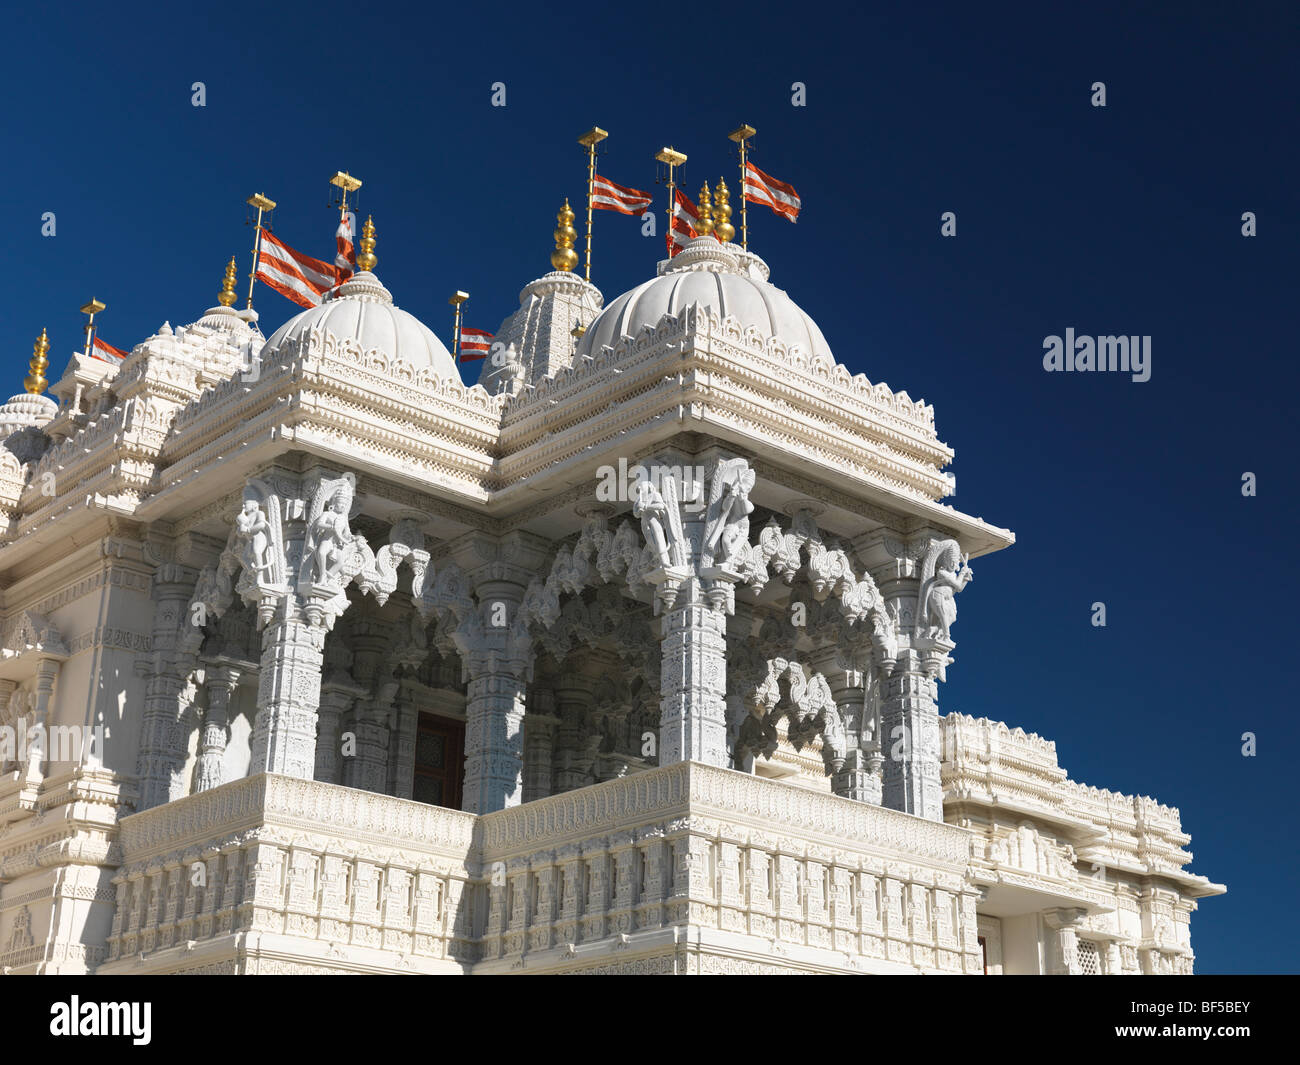 The Swaminarayan Mandir hand-carved white marble Hindu temple in Toronto, Ontario, Canada. Stock Photo